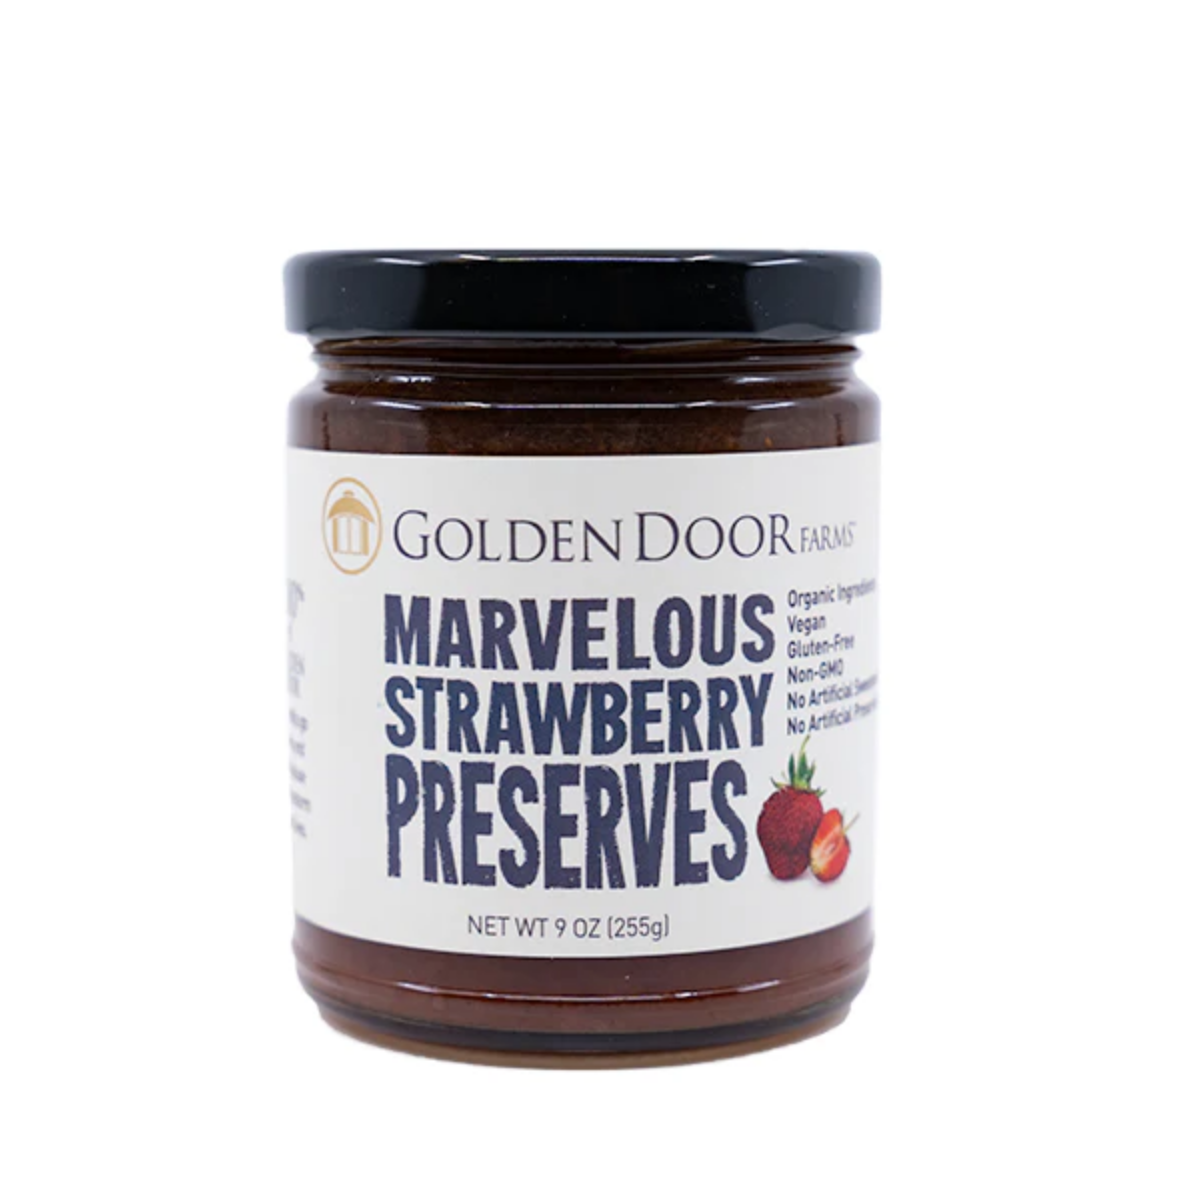 Marvelous Strawberry Preserves